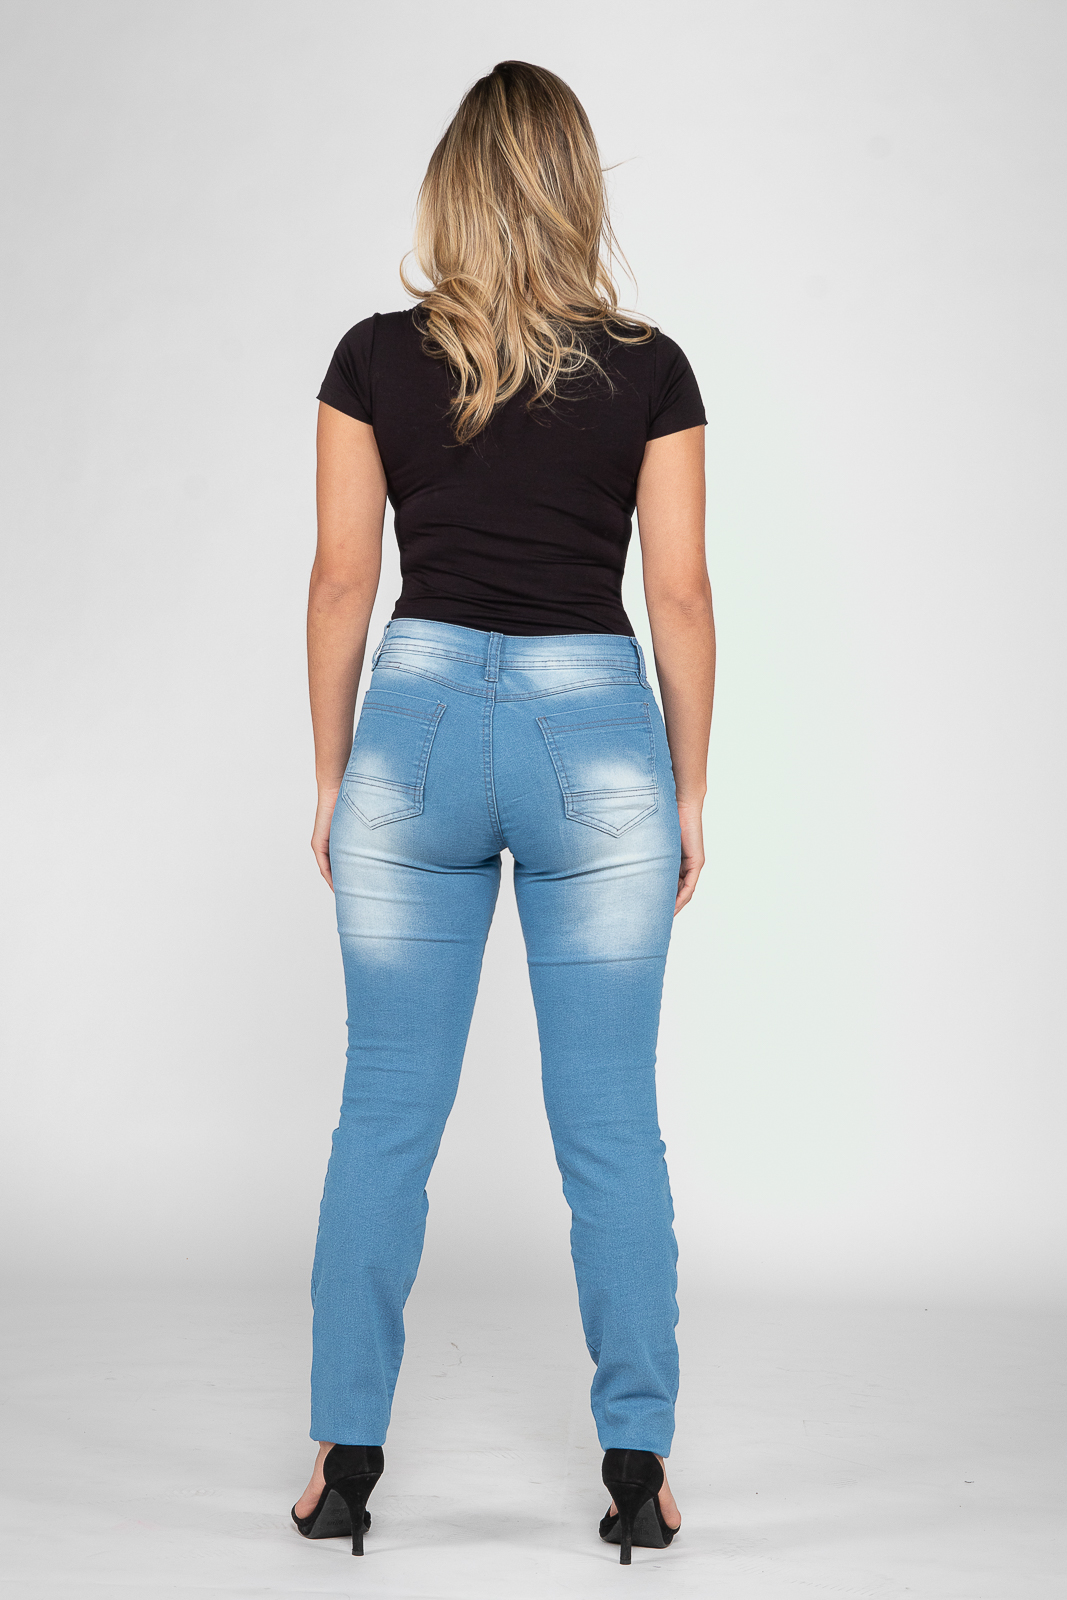 Jeans Feminino J. Brand - Tam 36, Calça Feminina J. Brand Usado 96914841